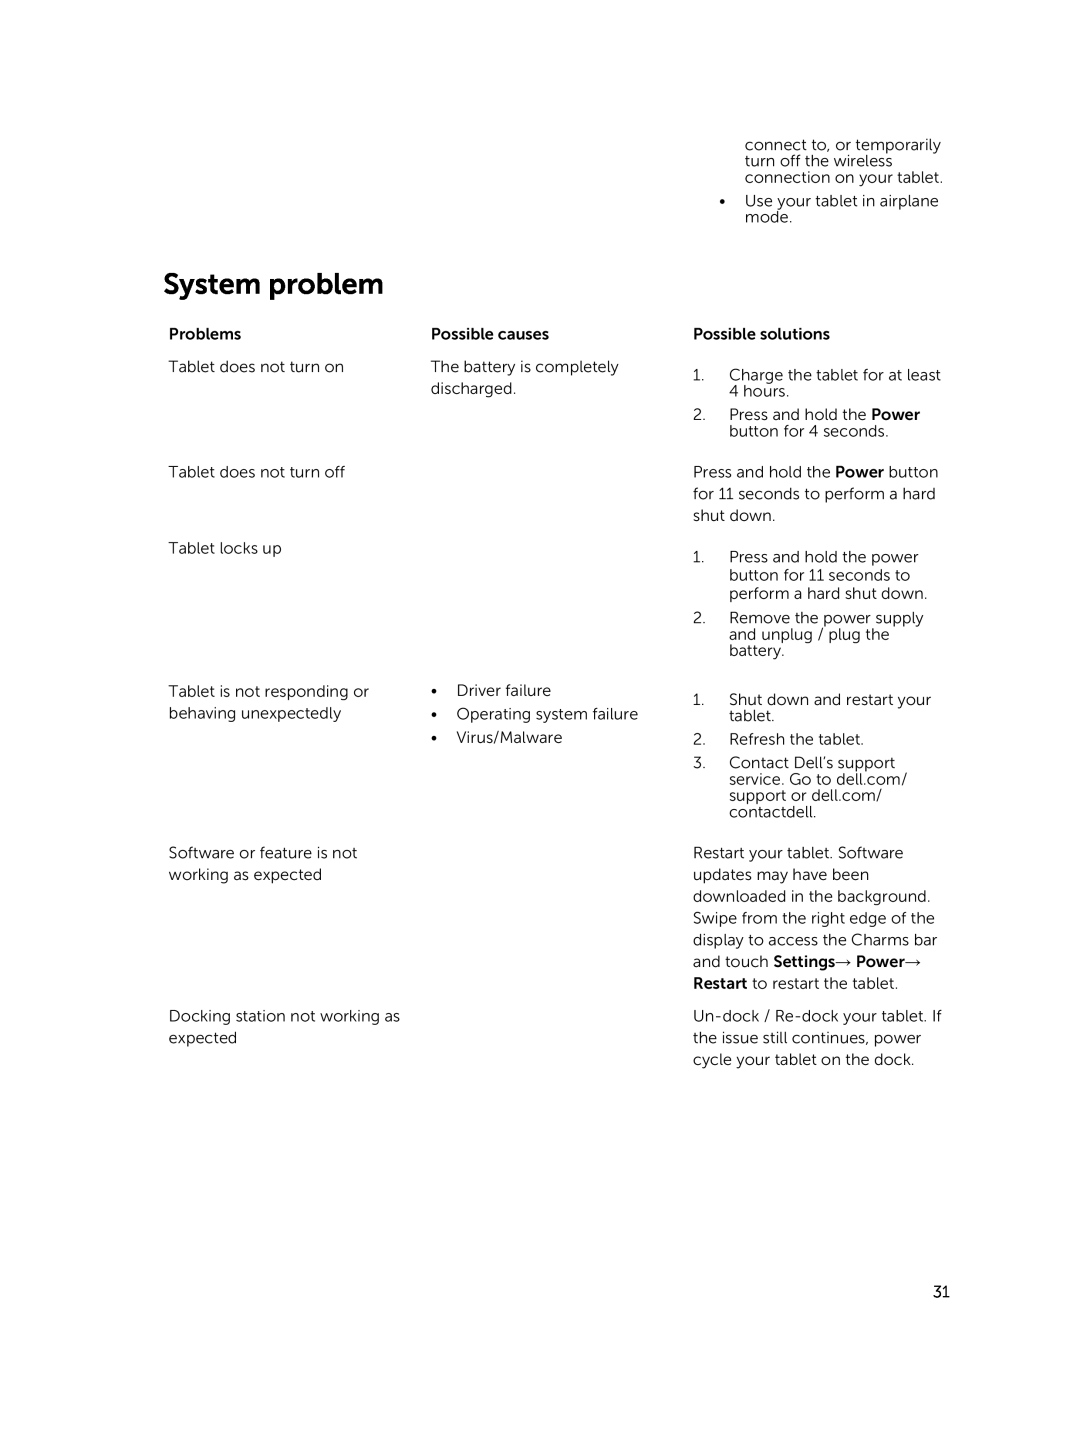 Dell 13-7350 manual System problem 